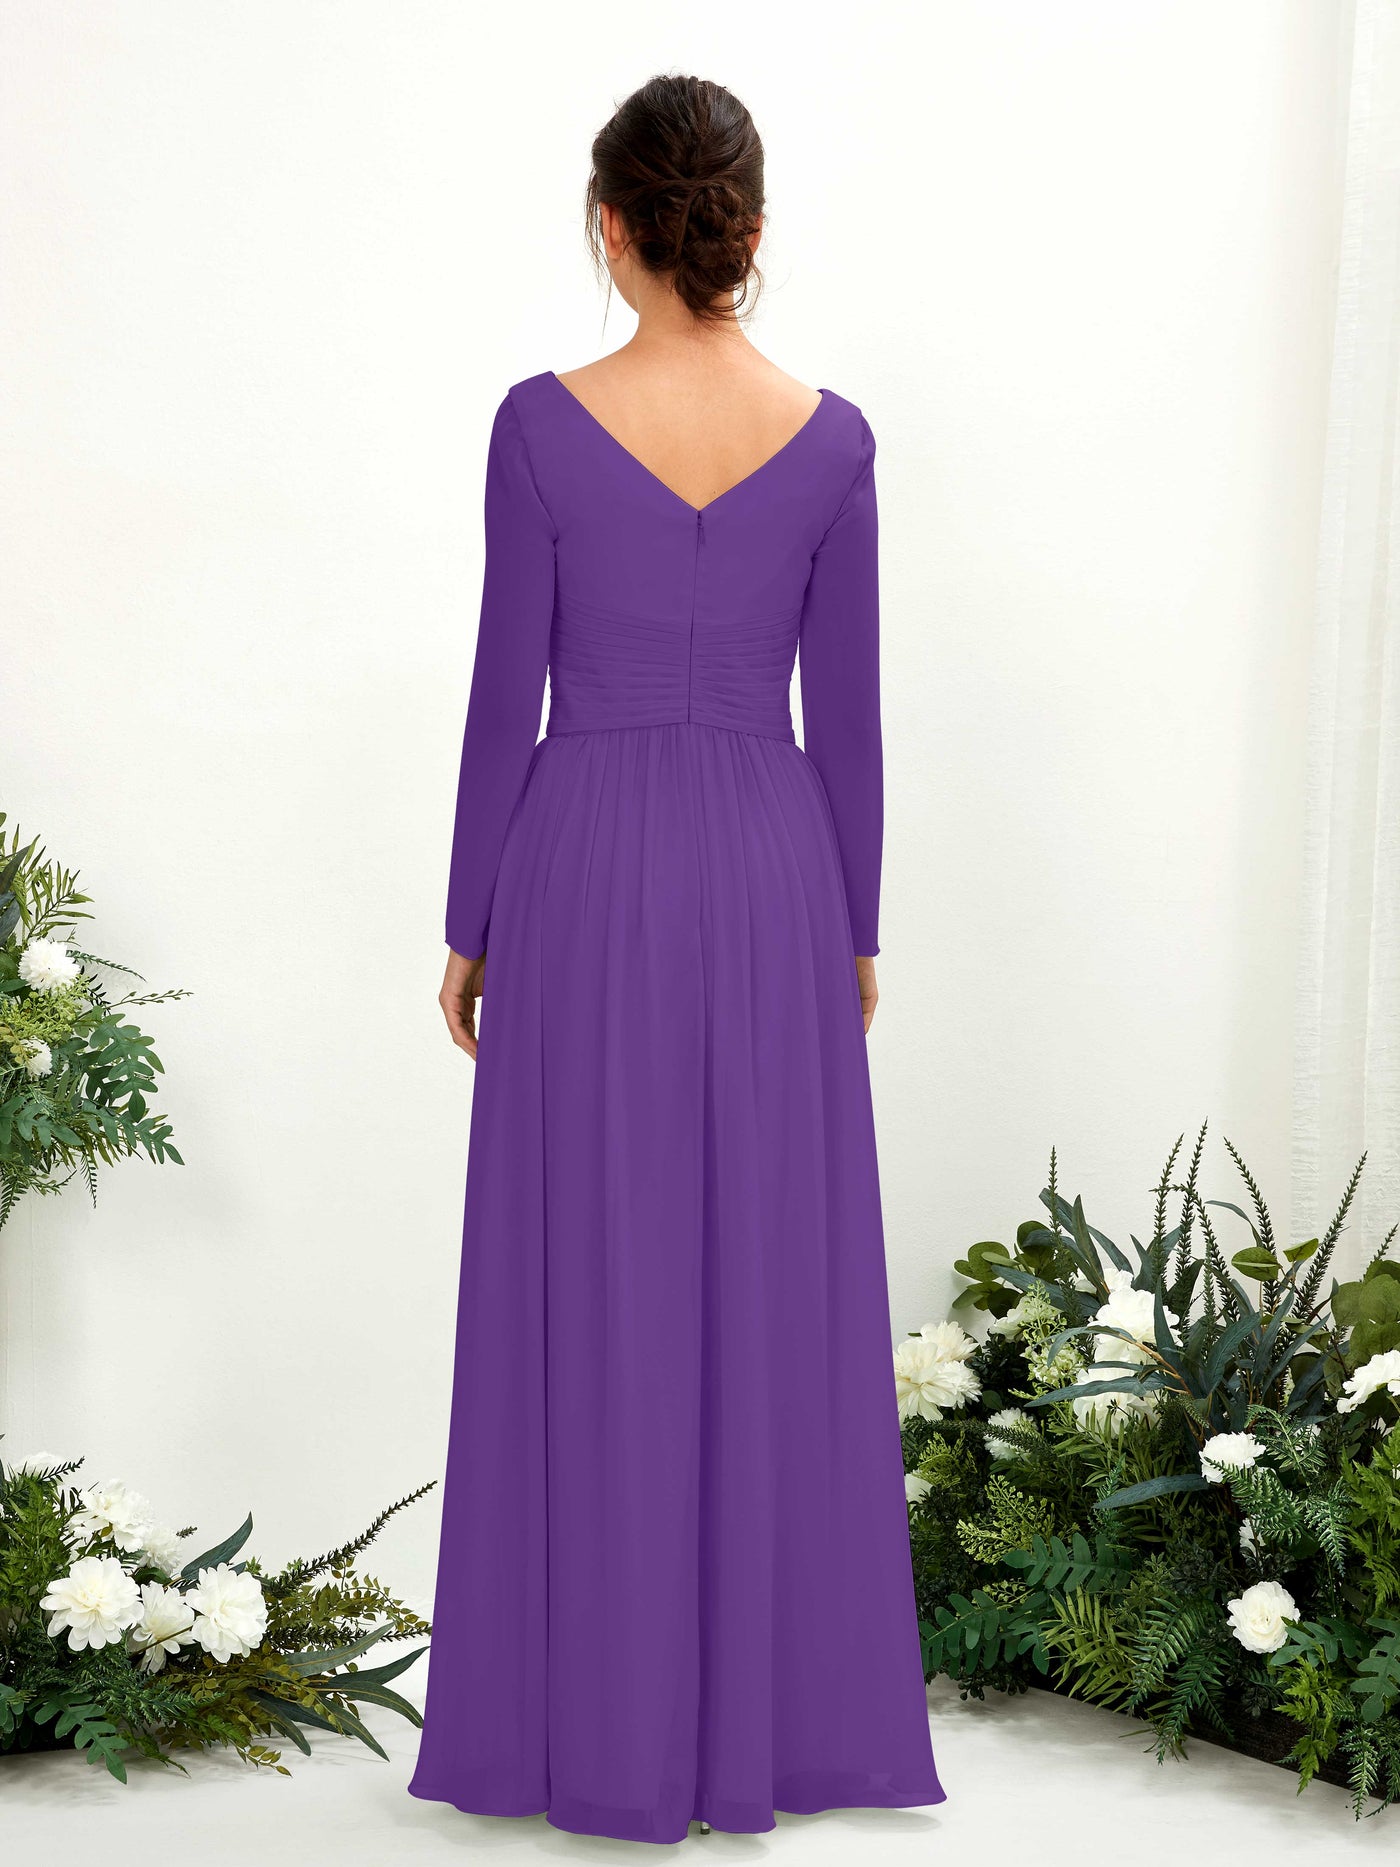 Regency Bridesmaid Dresses Bridesmaid Dress A-line Chiffon V-neck Full Length Long Sleeves Wedding Party Dress (81220328)#color_regency